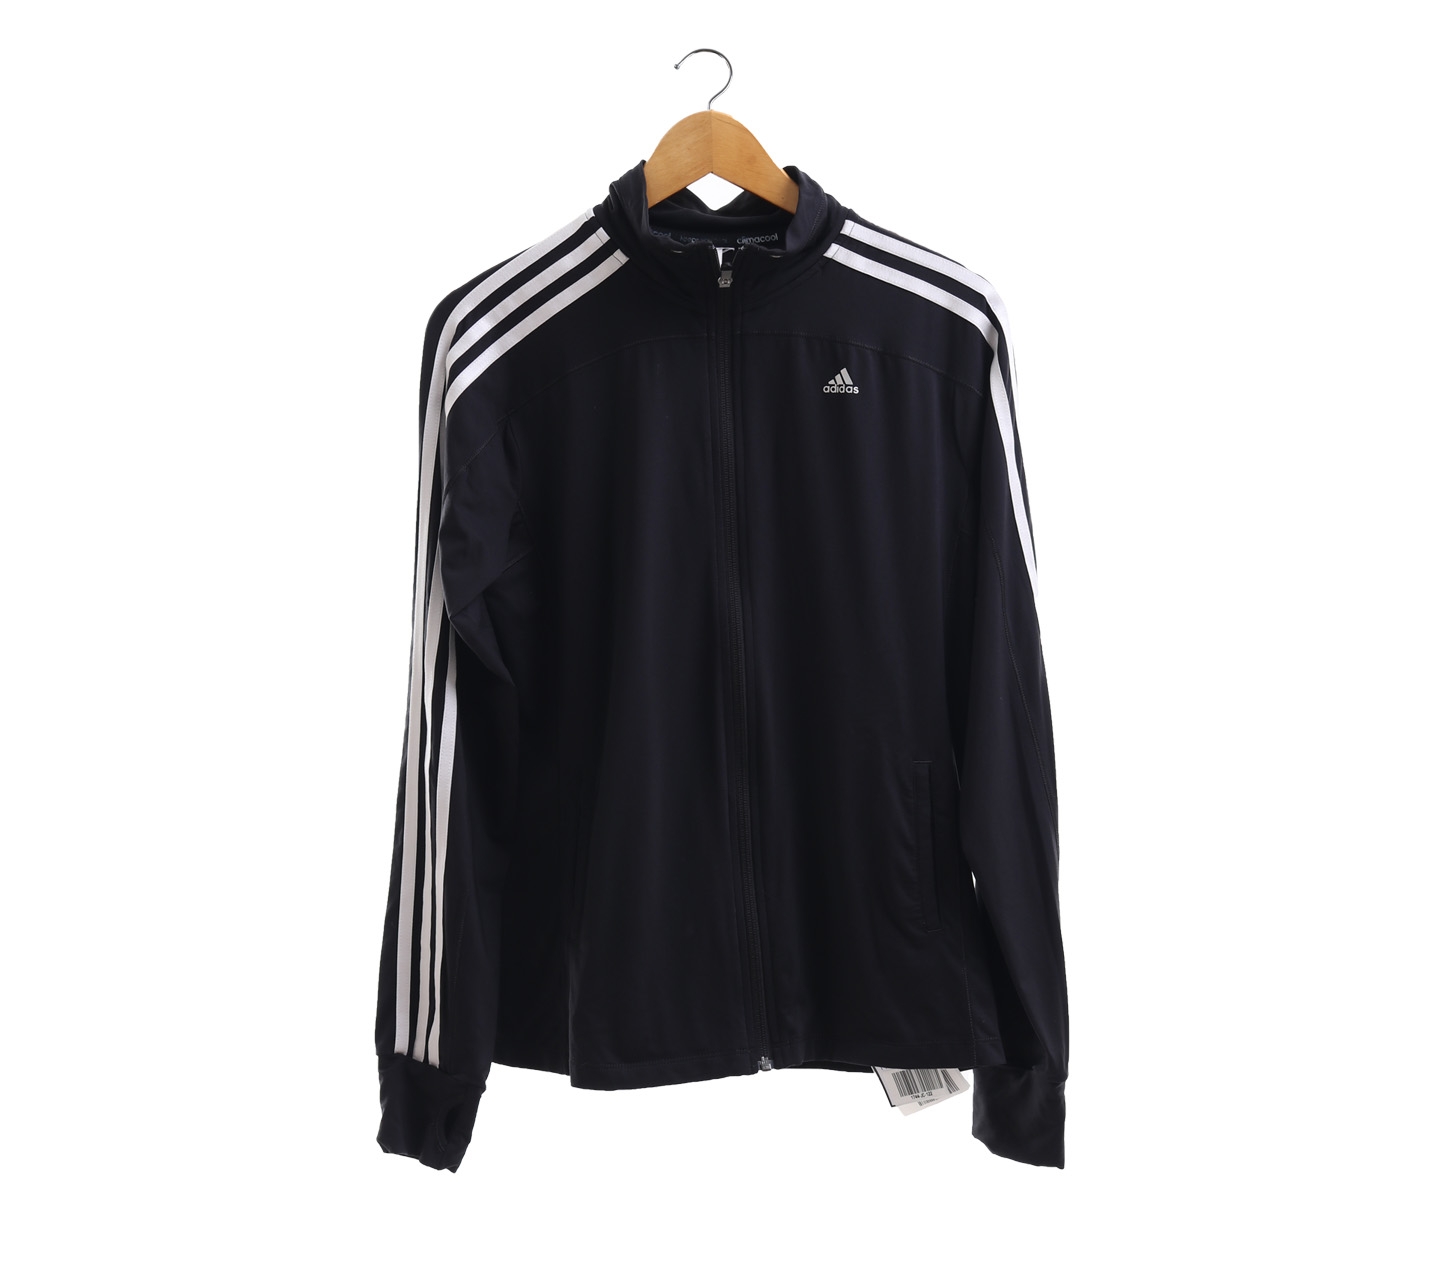 Adidas Black Jacket